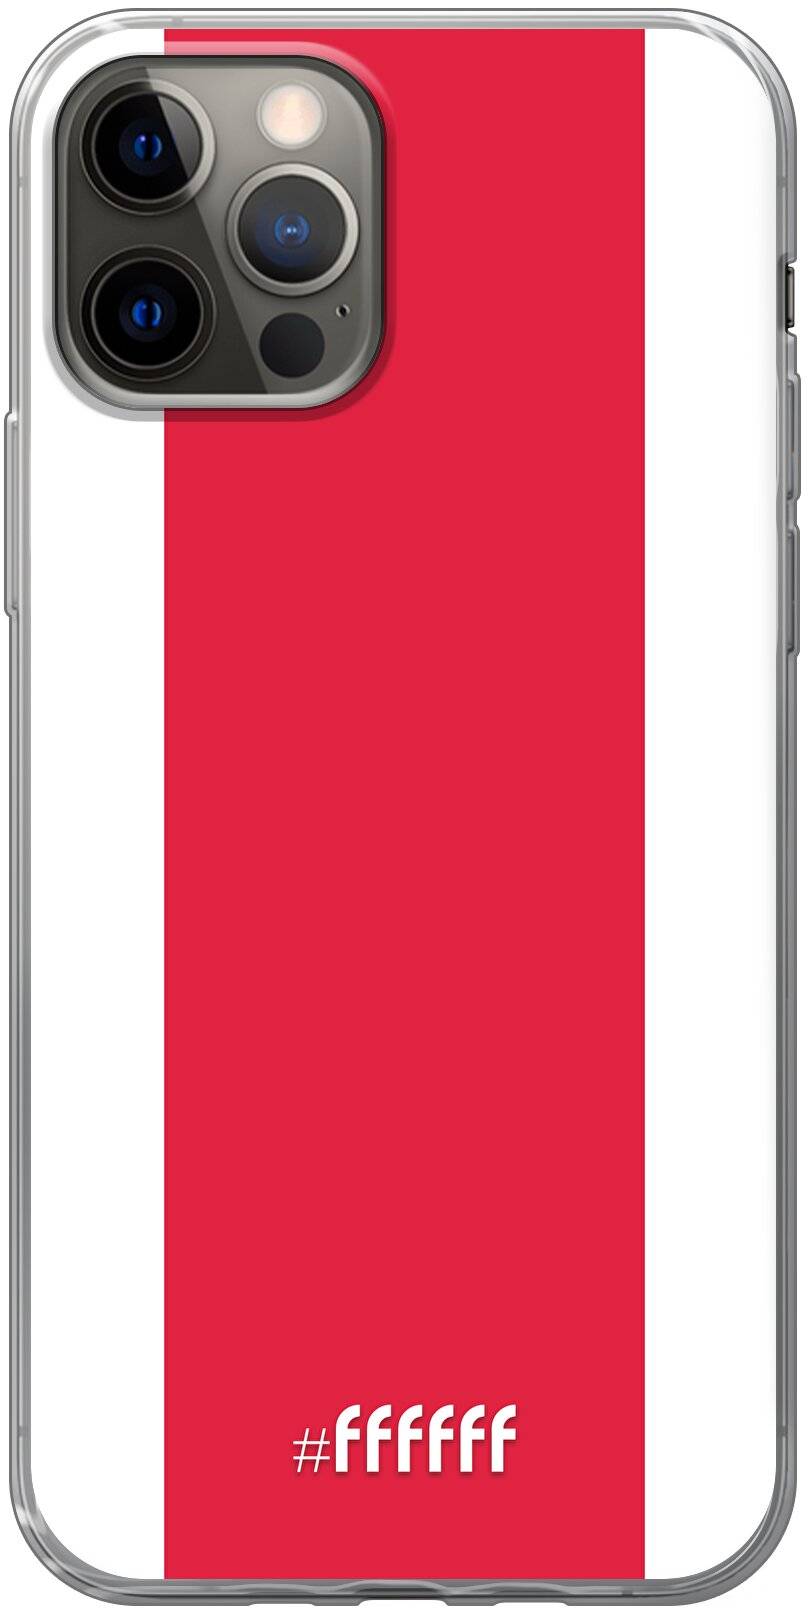 Analist pomp Arbeid AFC Ajax (iPhone 12 Pro) #ffffff telefoonhoesje • 6F